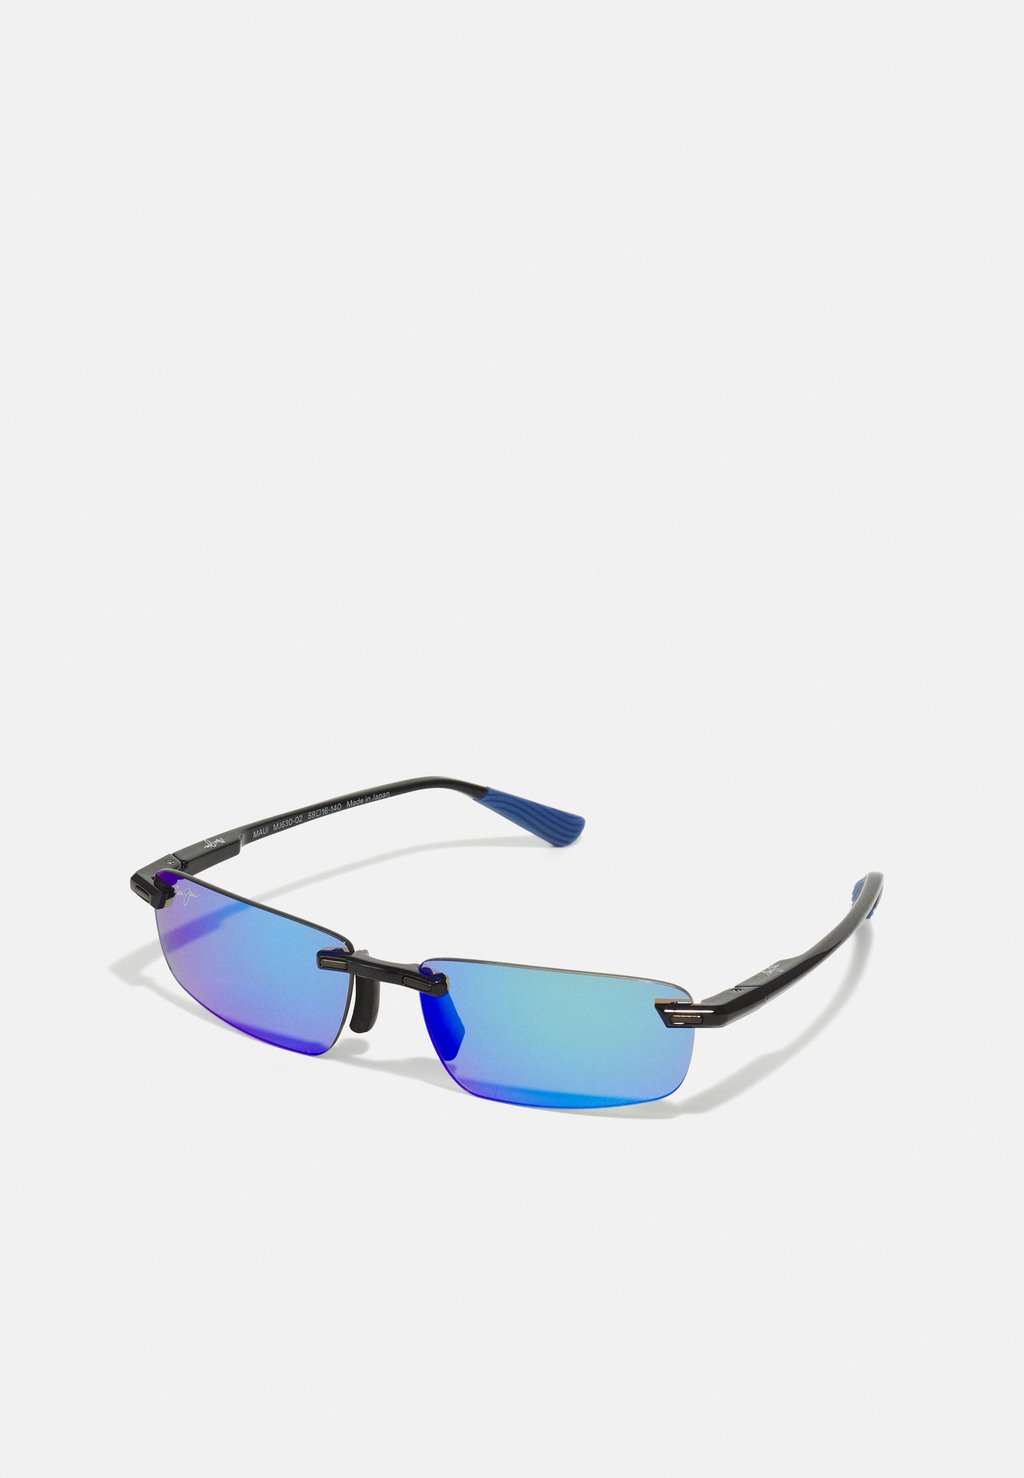 Солнцезащитные очки Maui Jim, цвет black/blue солнцезащитные очки kanaio coast maui jim цвет matte soft black white blue